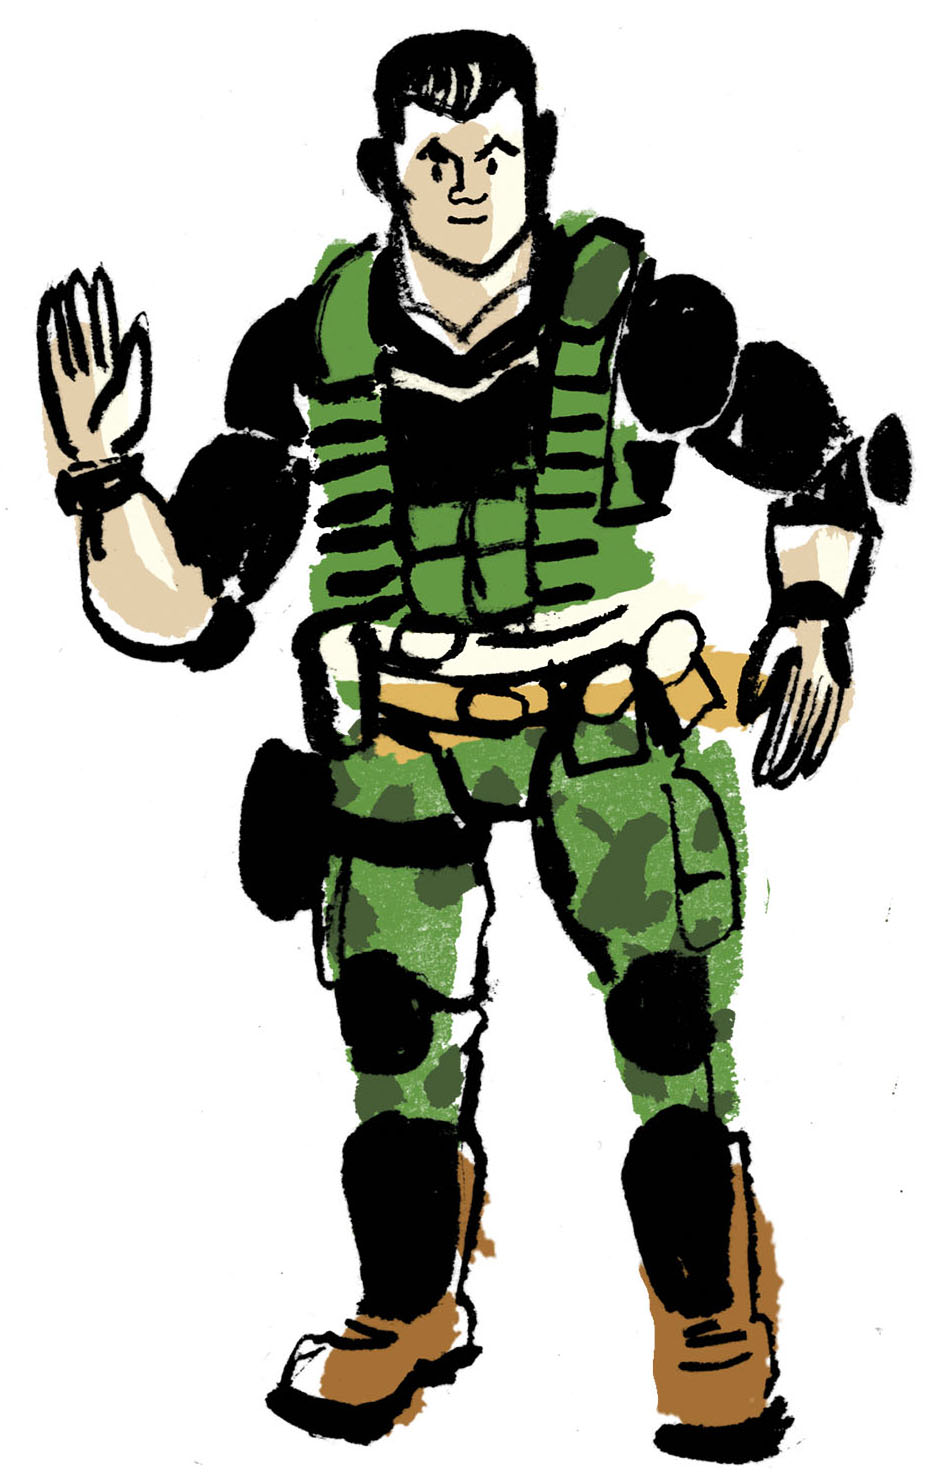 An illustration of a G.I. Joe action figure